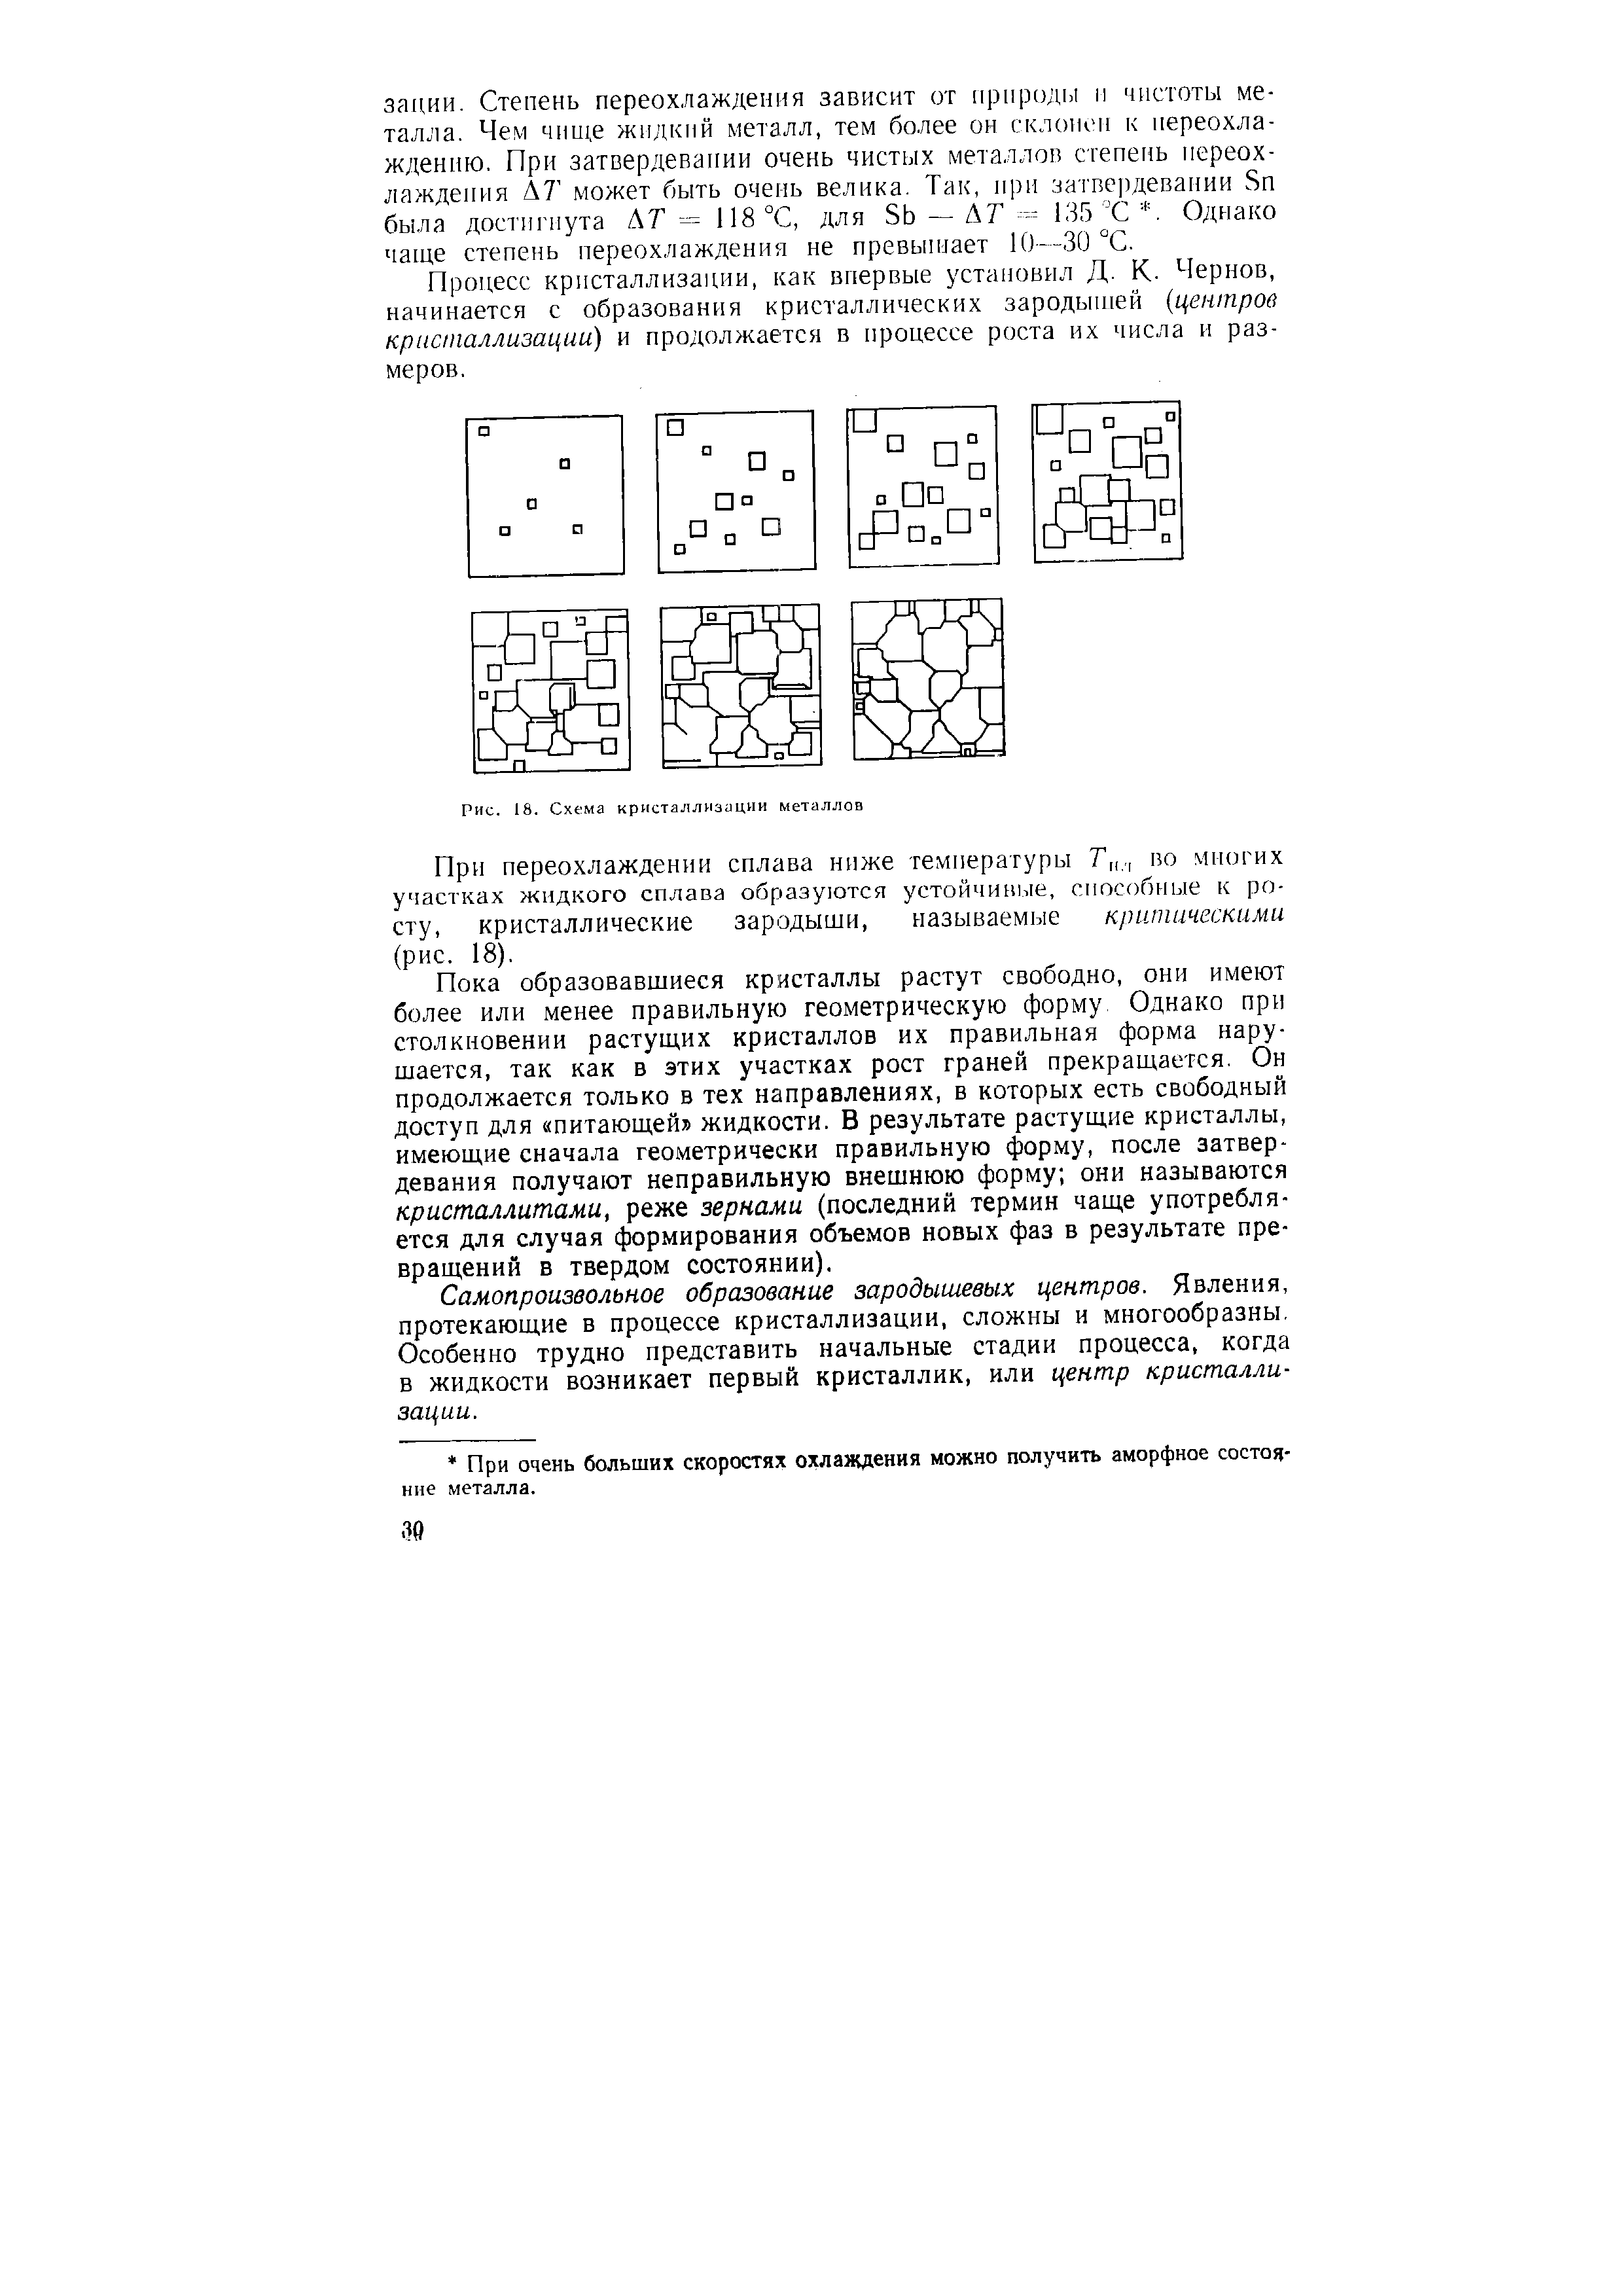 Рис. 18, Схема кристаллизации металлов
